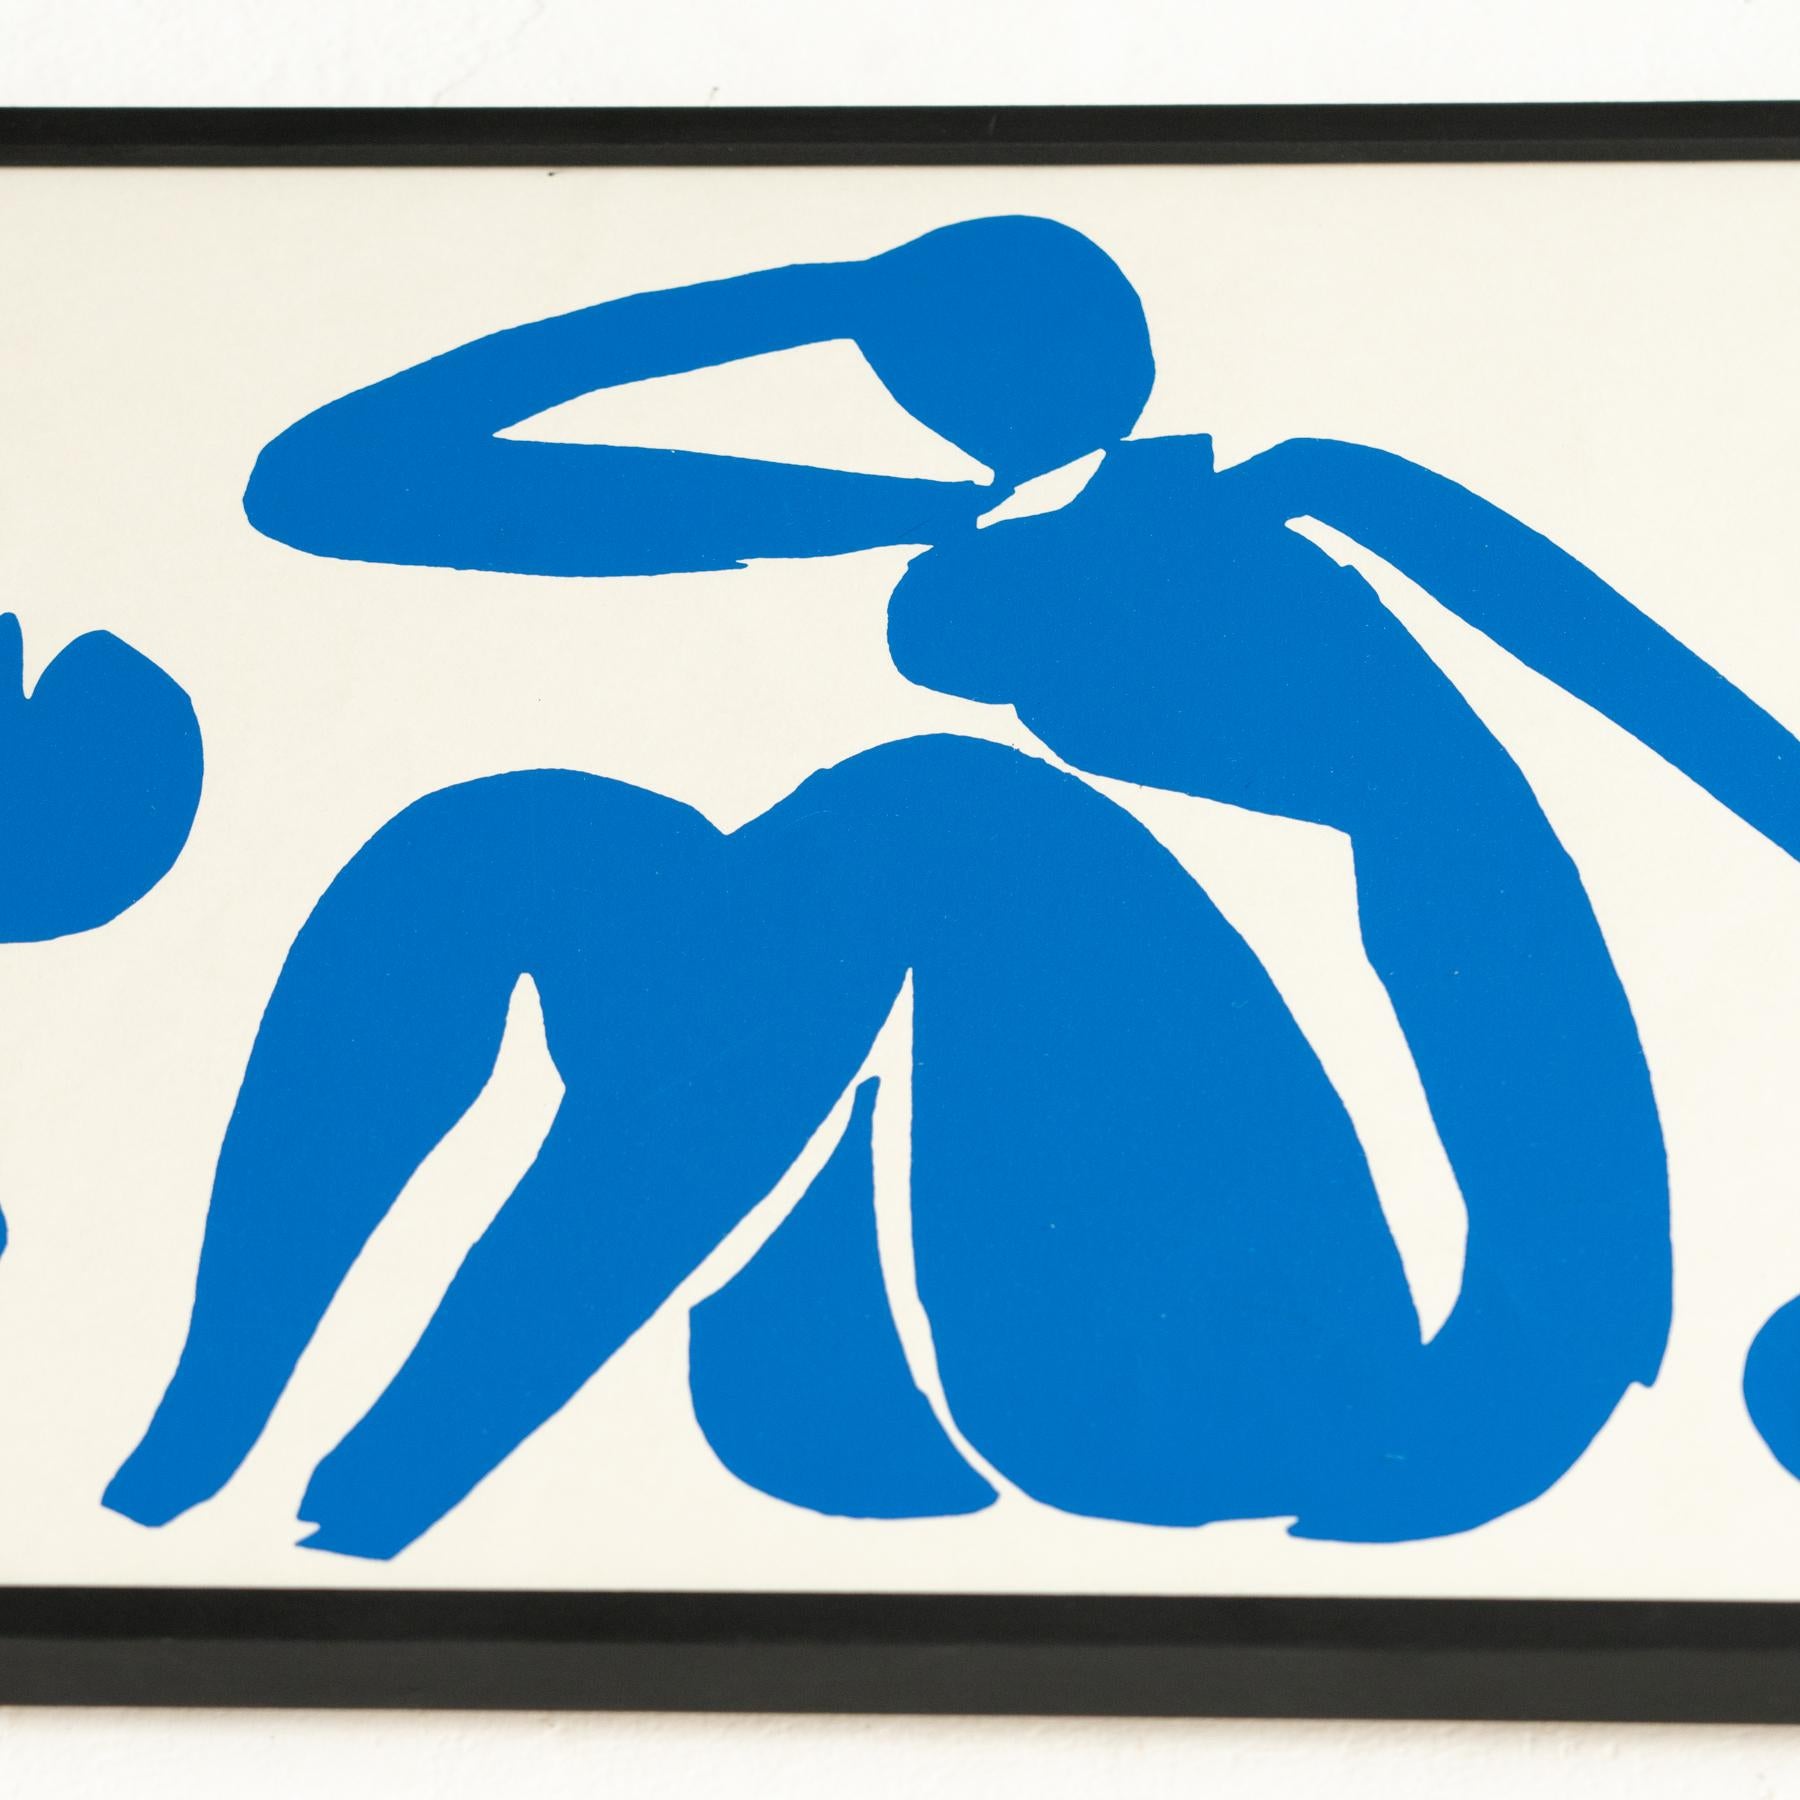 Paper Henri Matisse Color Lithography circa 1970